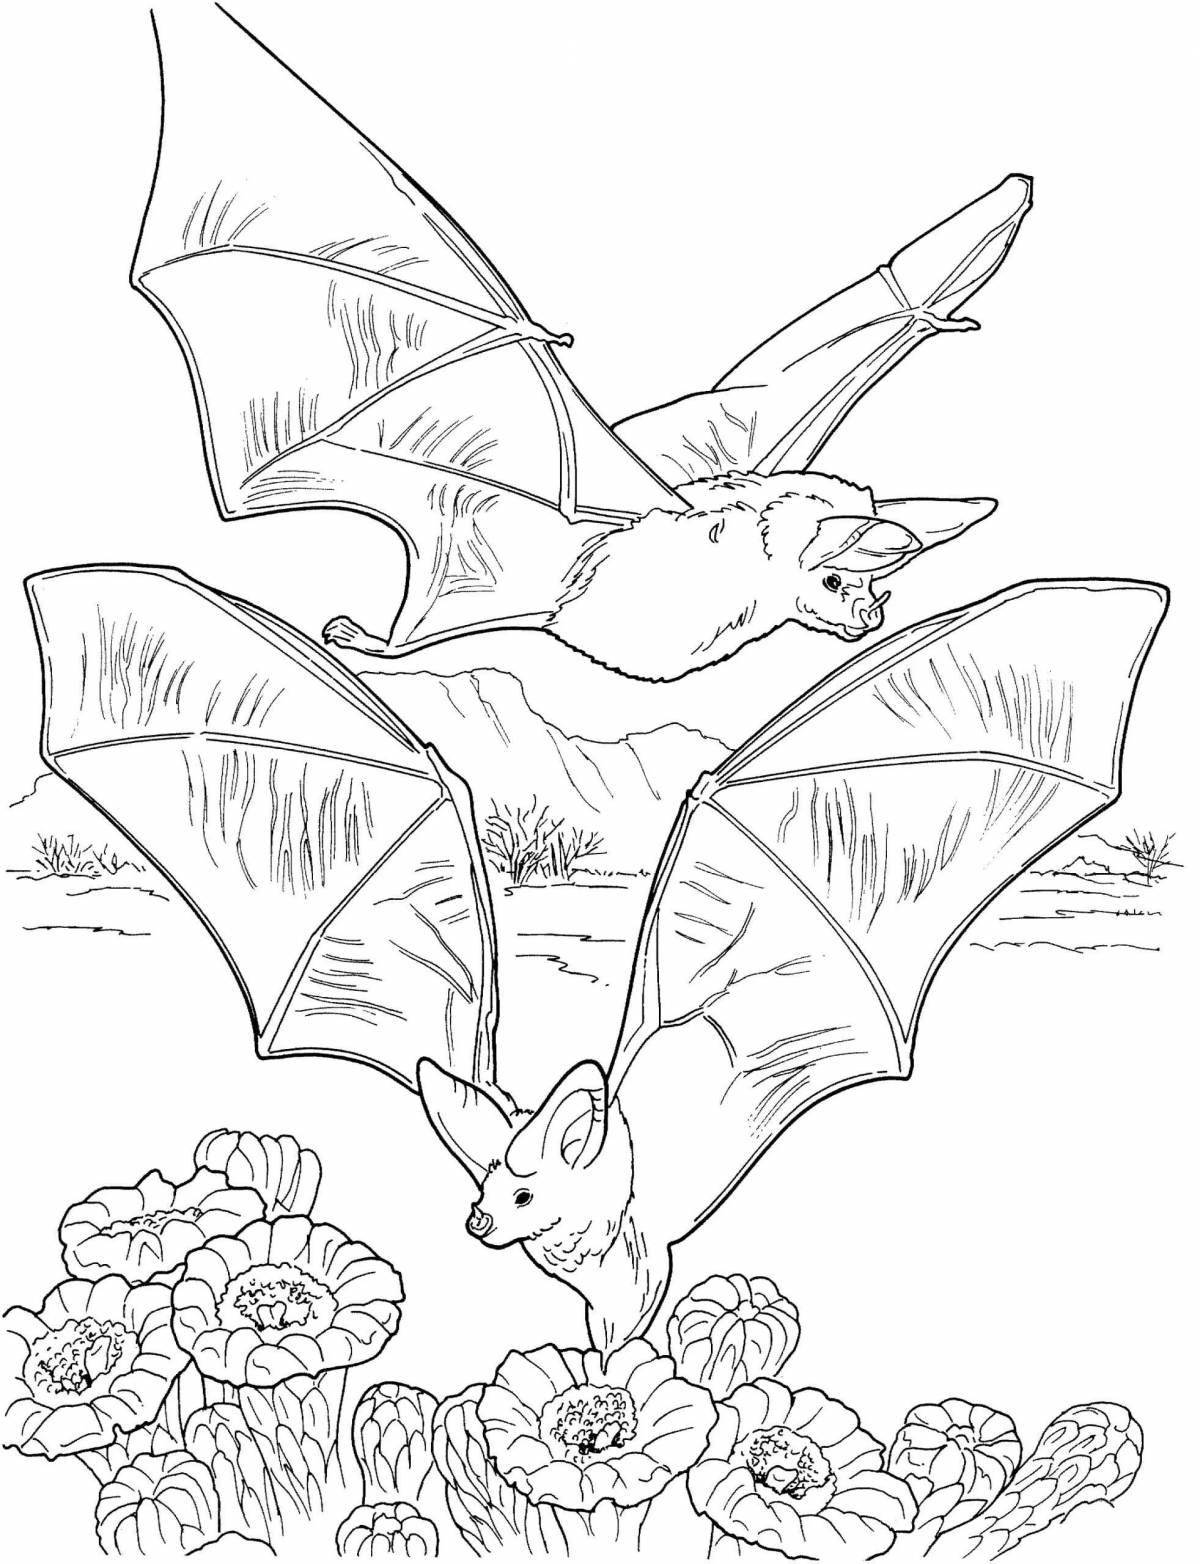 Animated bat coloring book